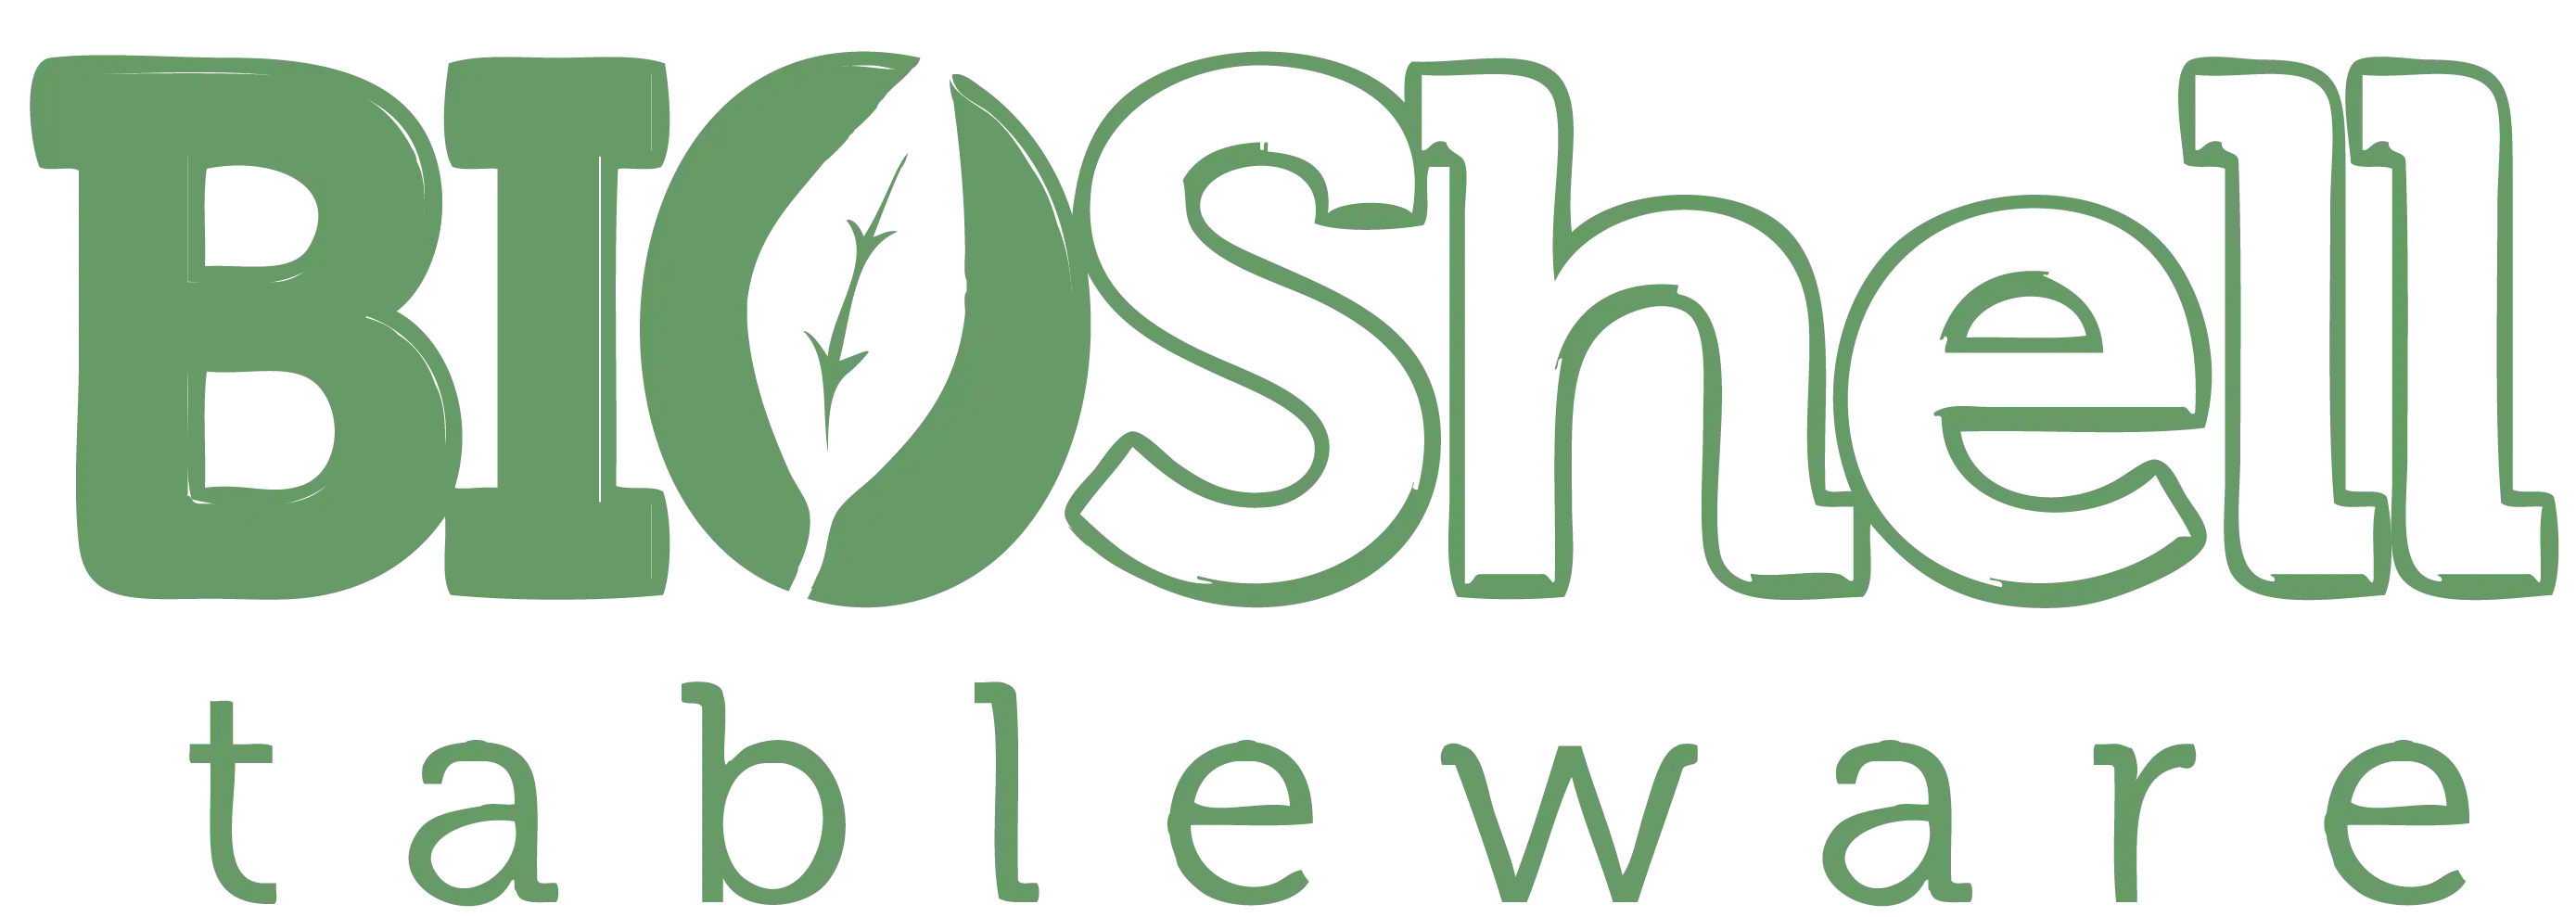 BioShell Tableware Logo